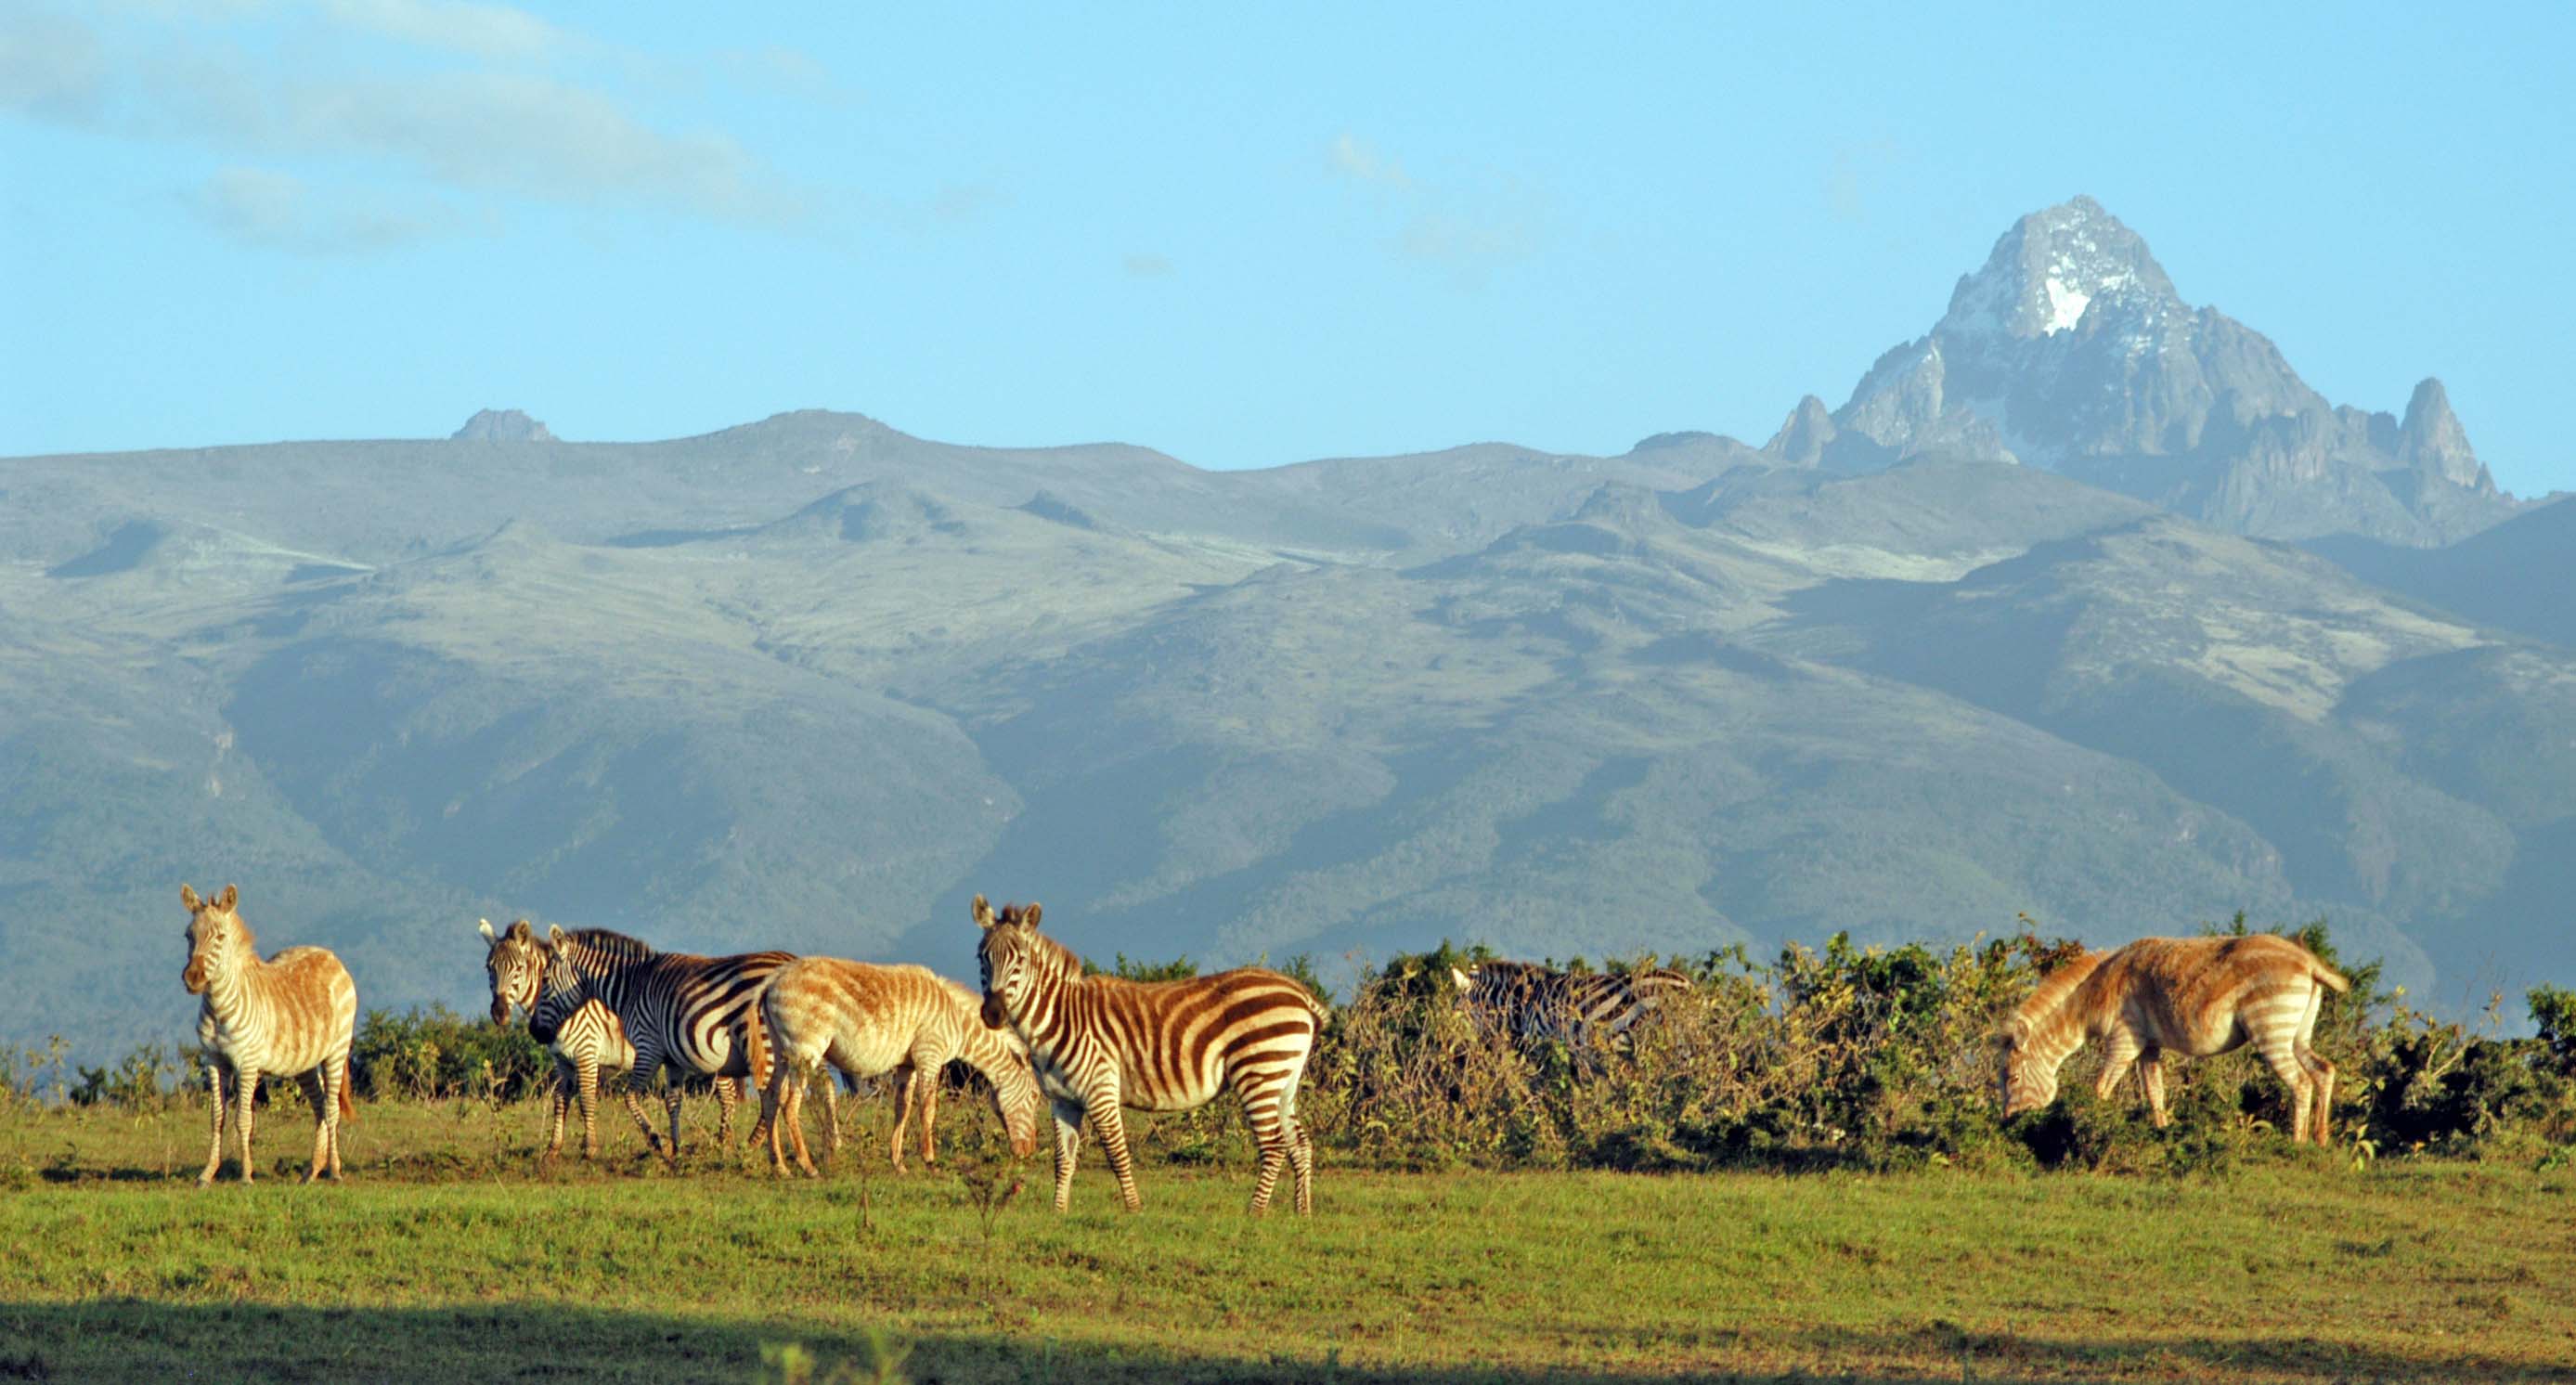 Mount Kenya National Park (Photo: silverbirdsafari-africa.com)